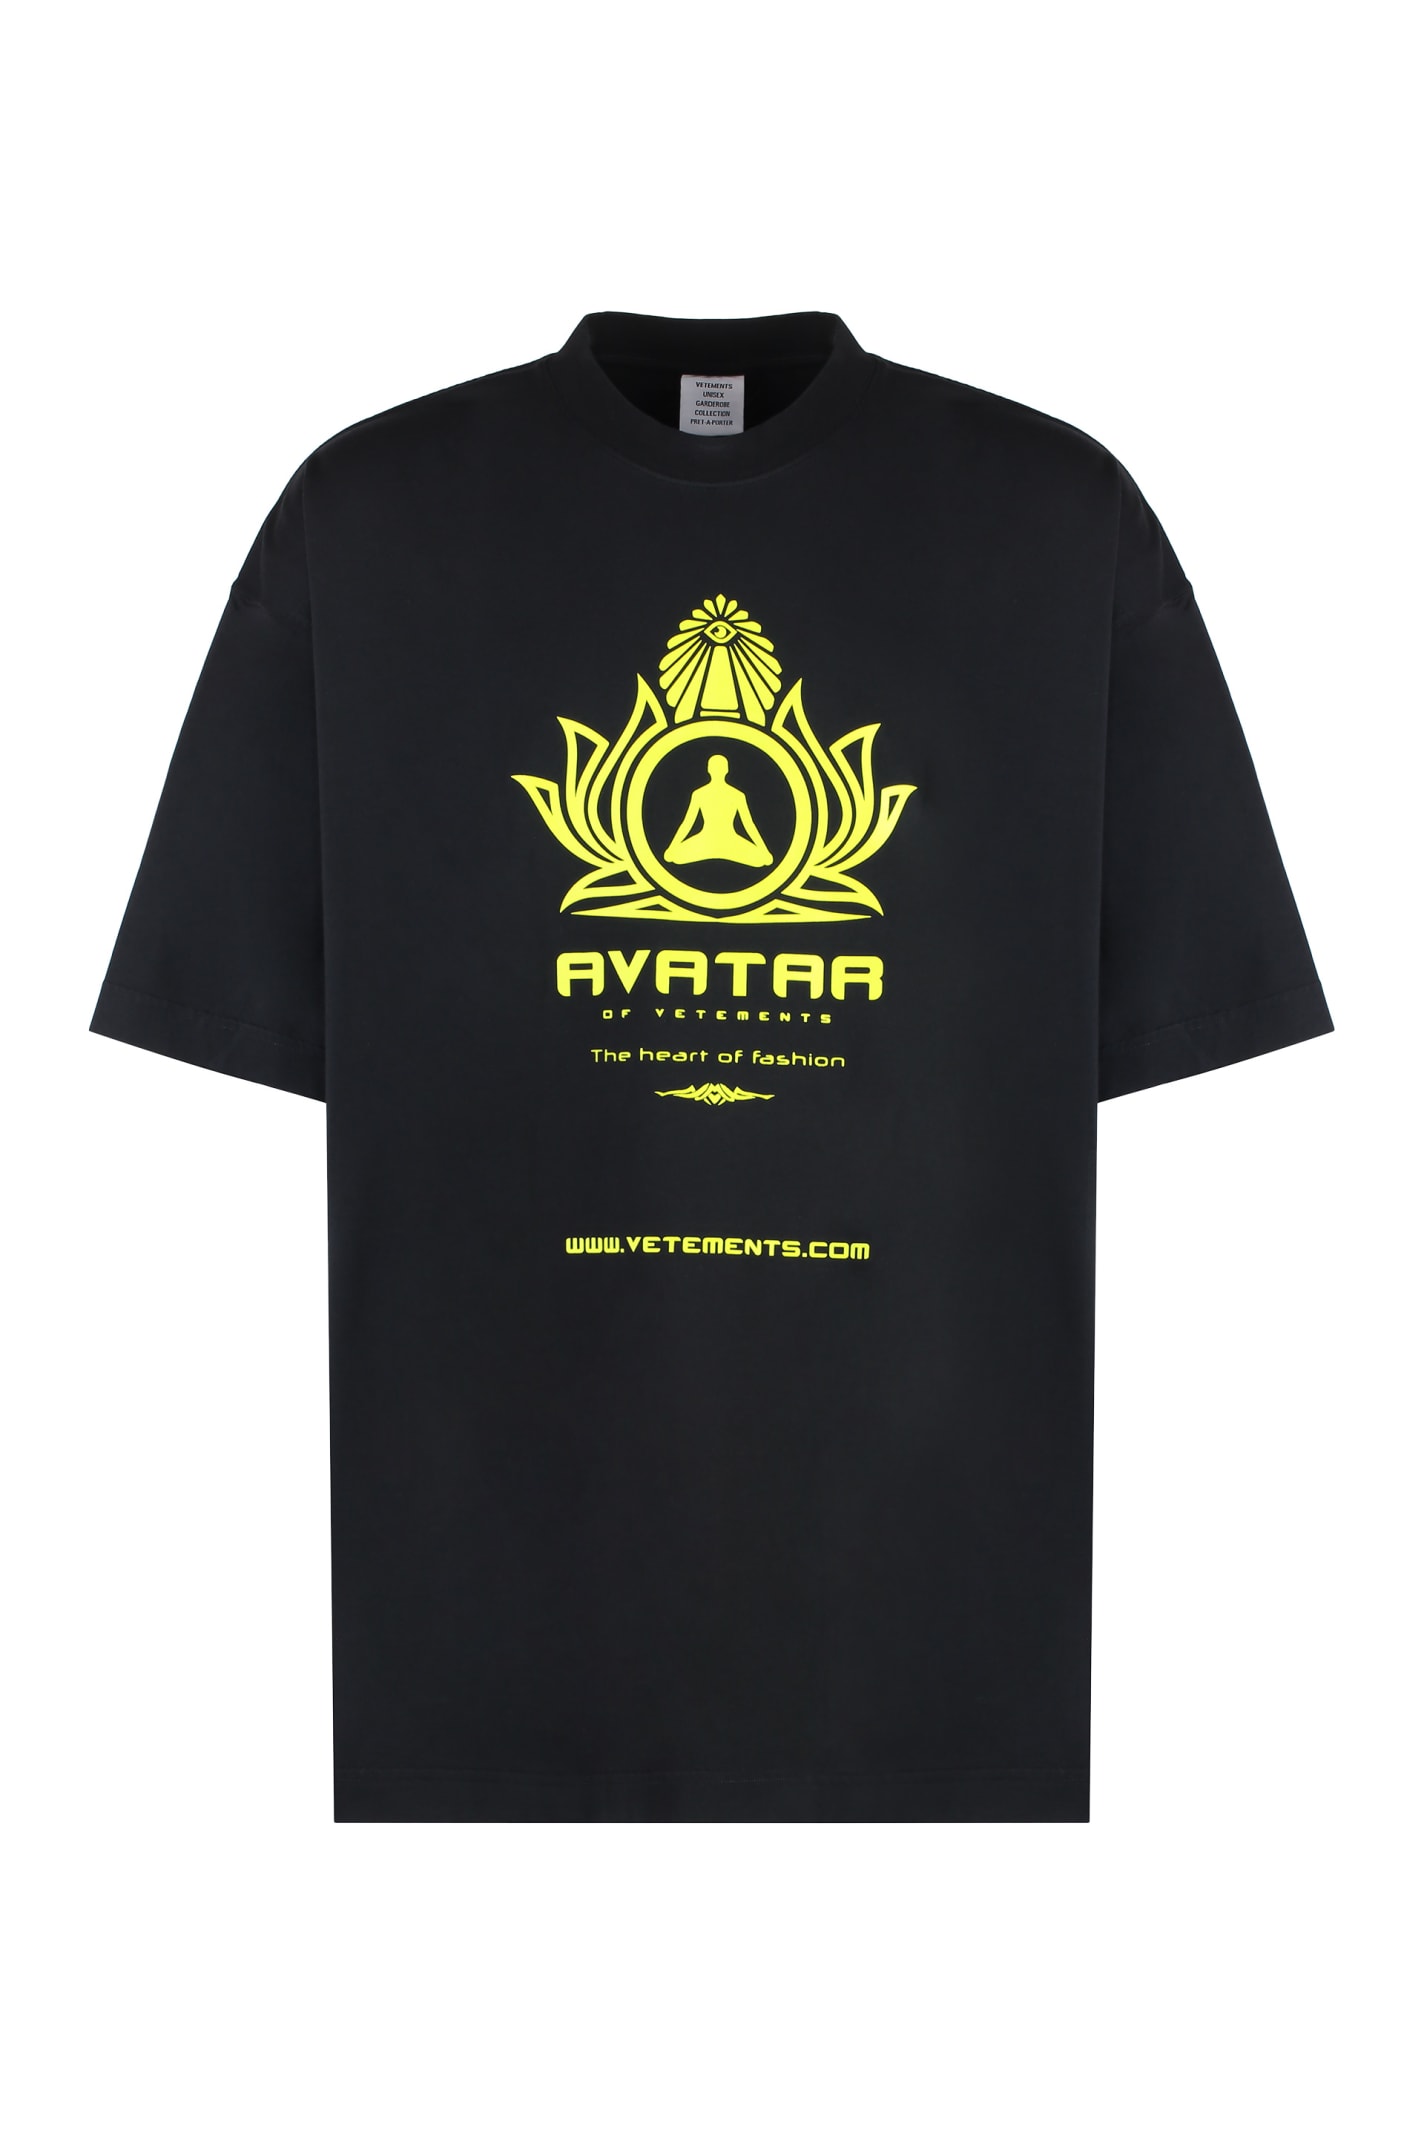 Avatar Cotton T-shirt